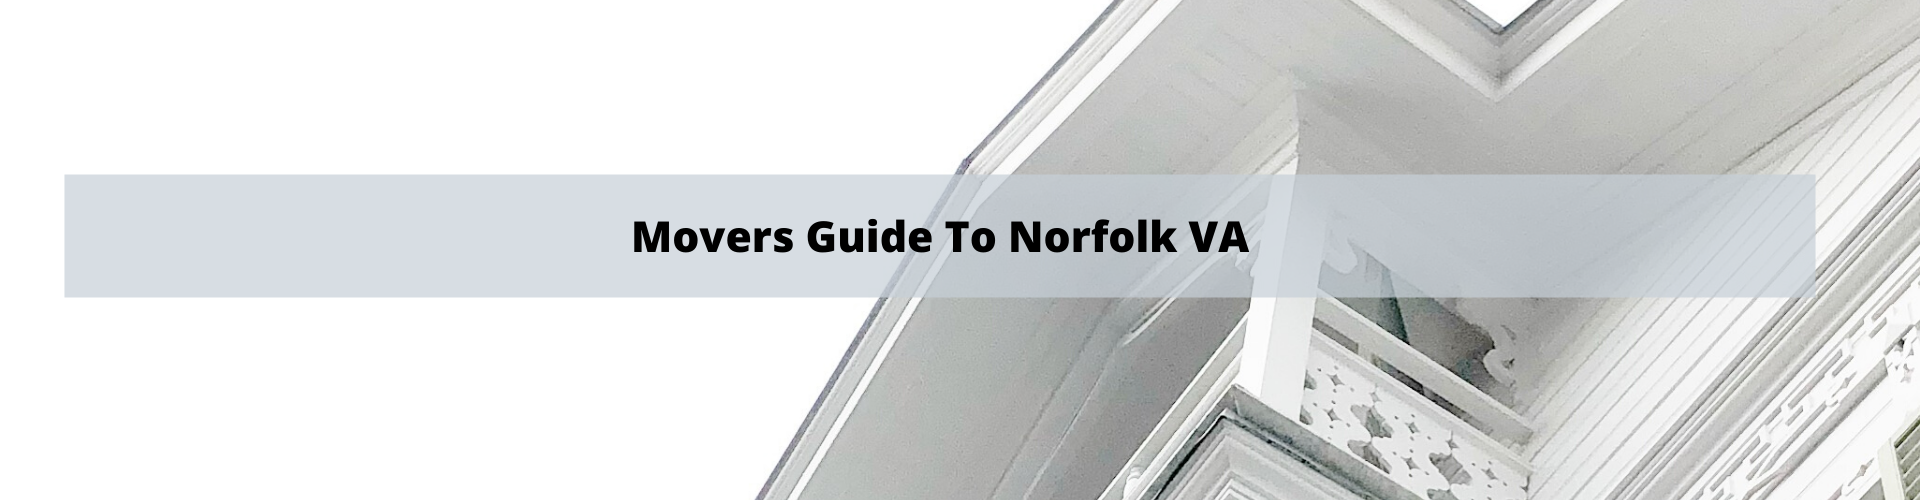 Norfolk VA Mover's Guide